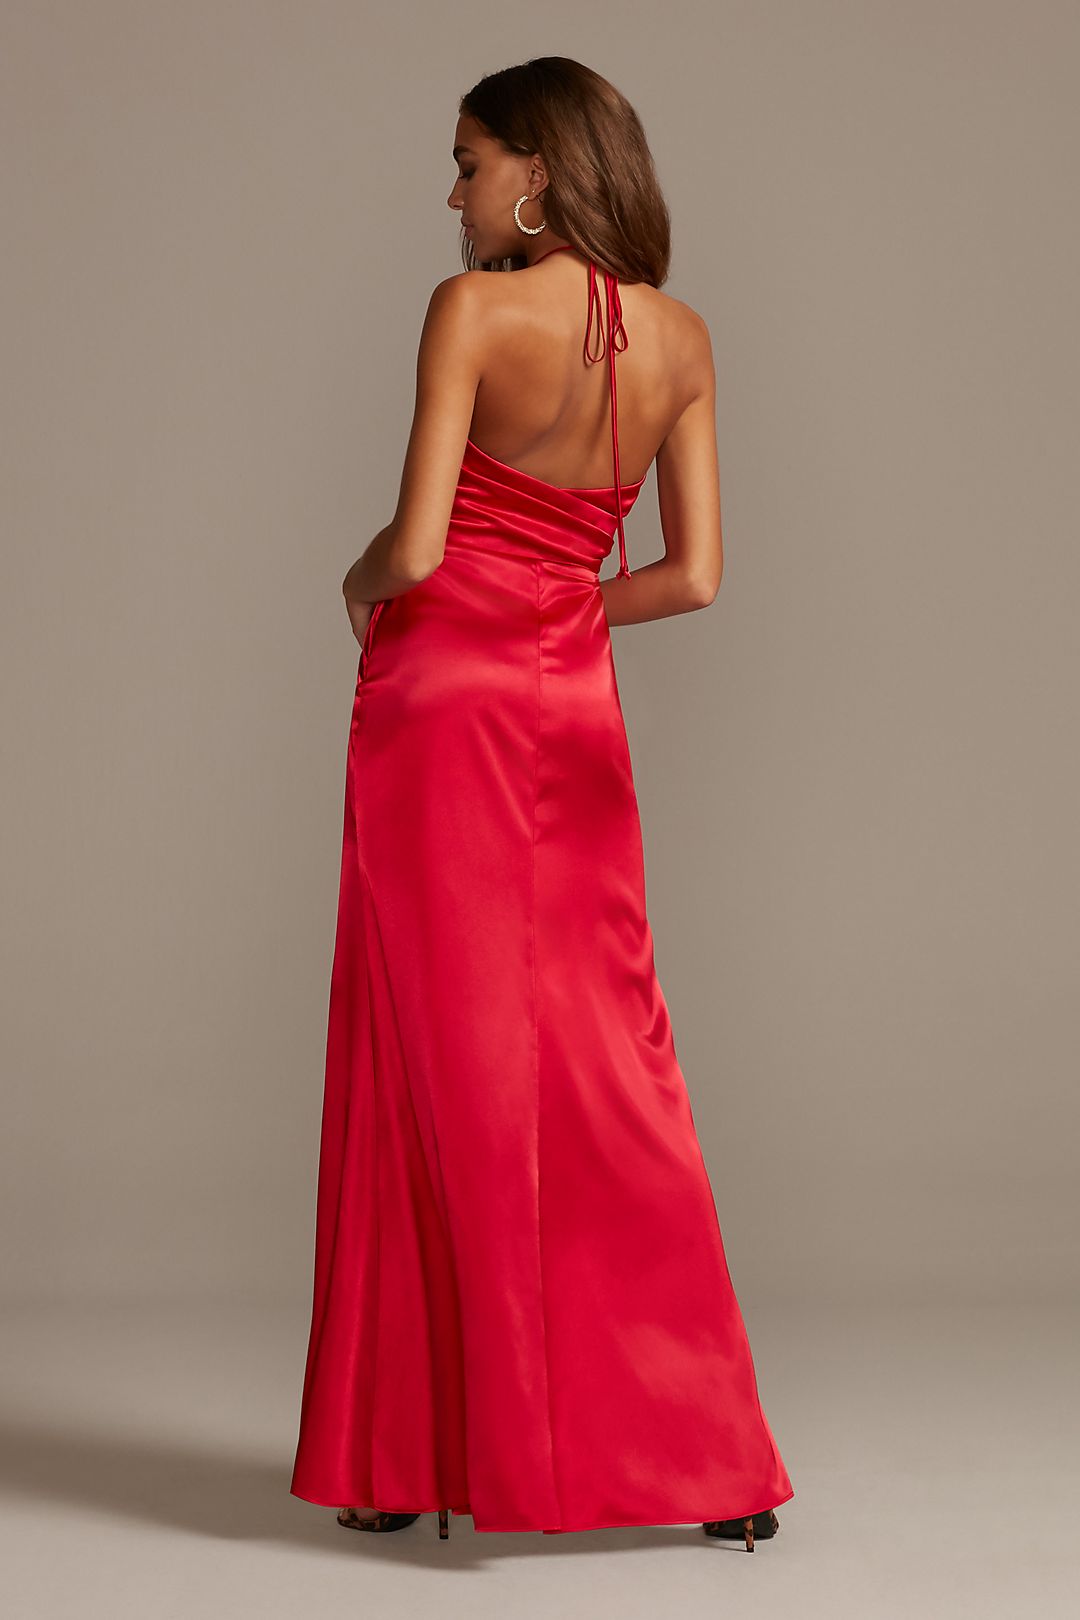 Wrap Halter Long Satin Dress with Skirt Slit | David's Bridal